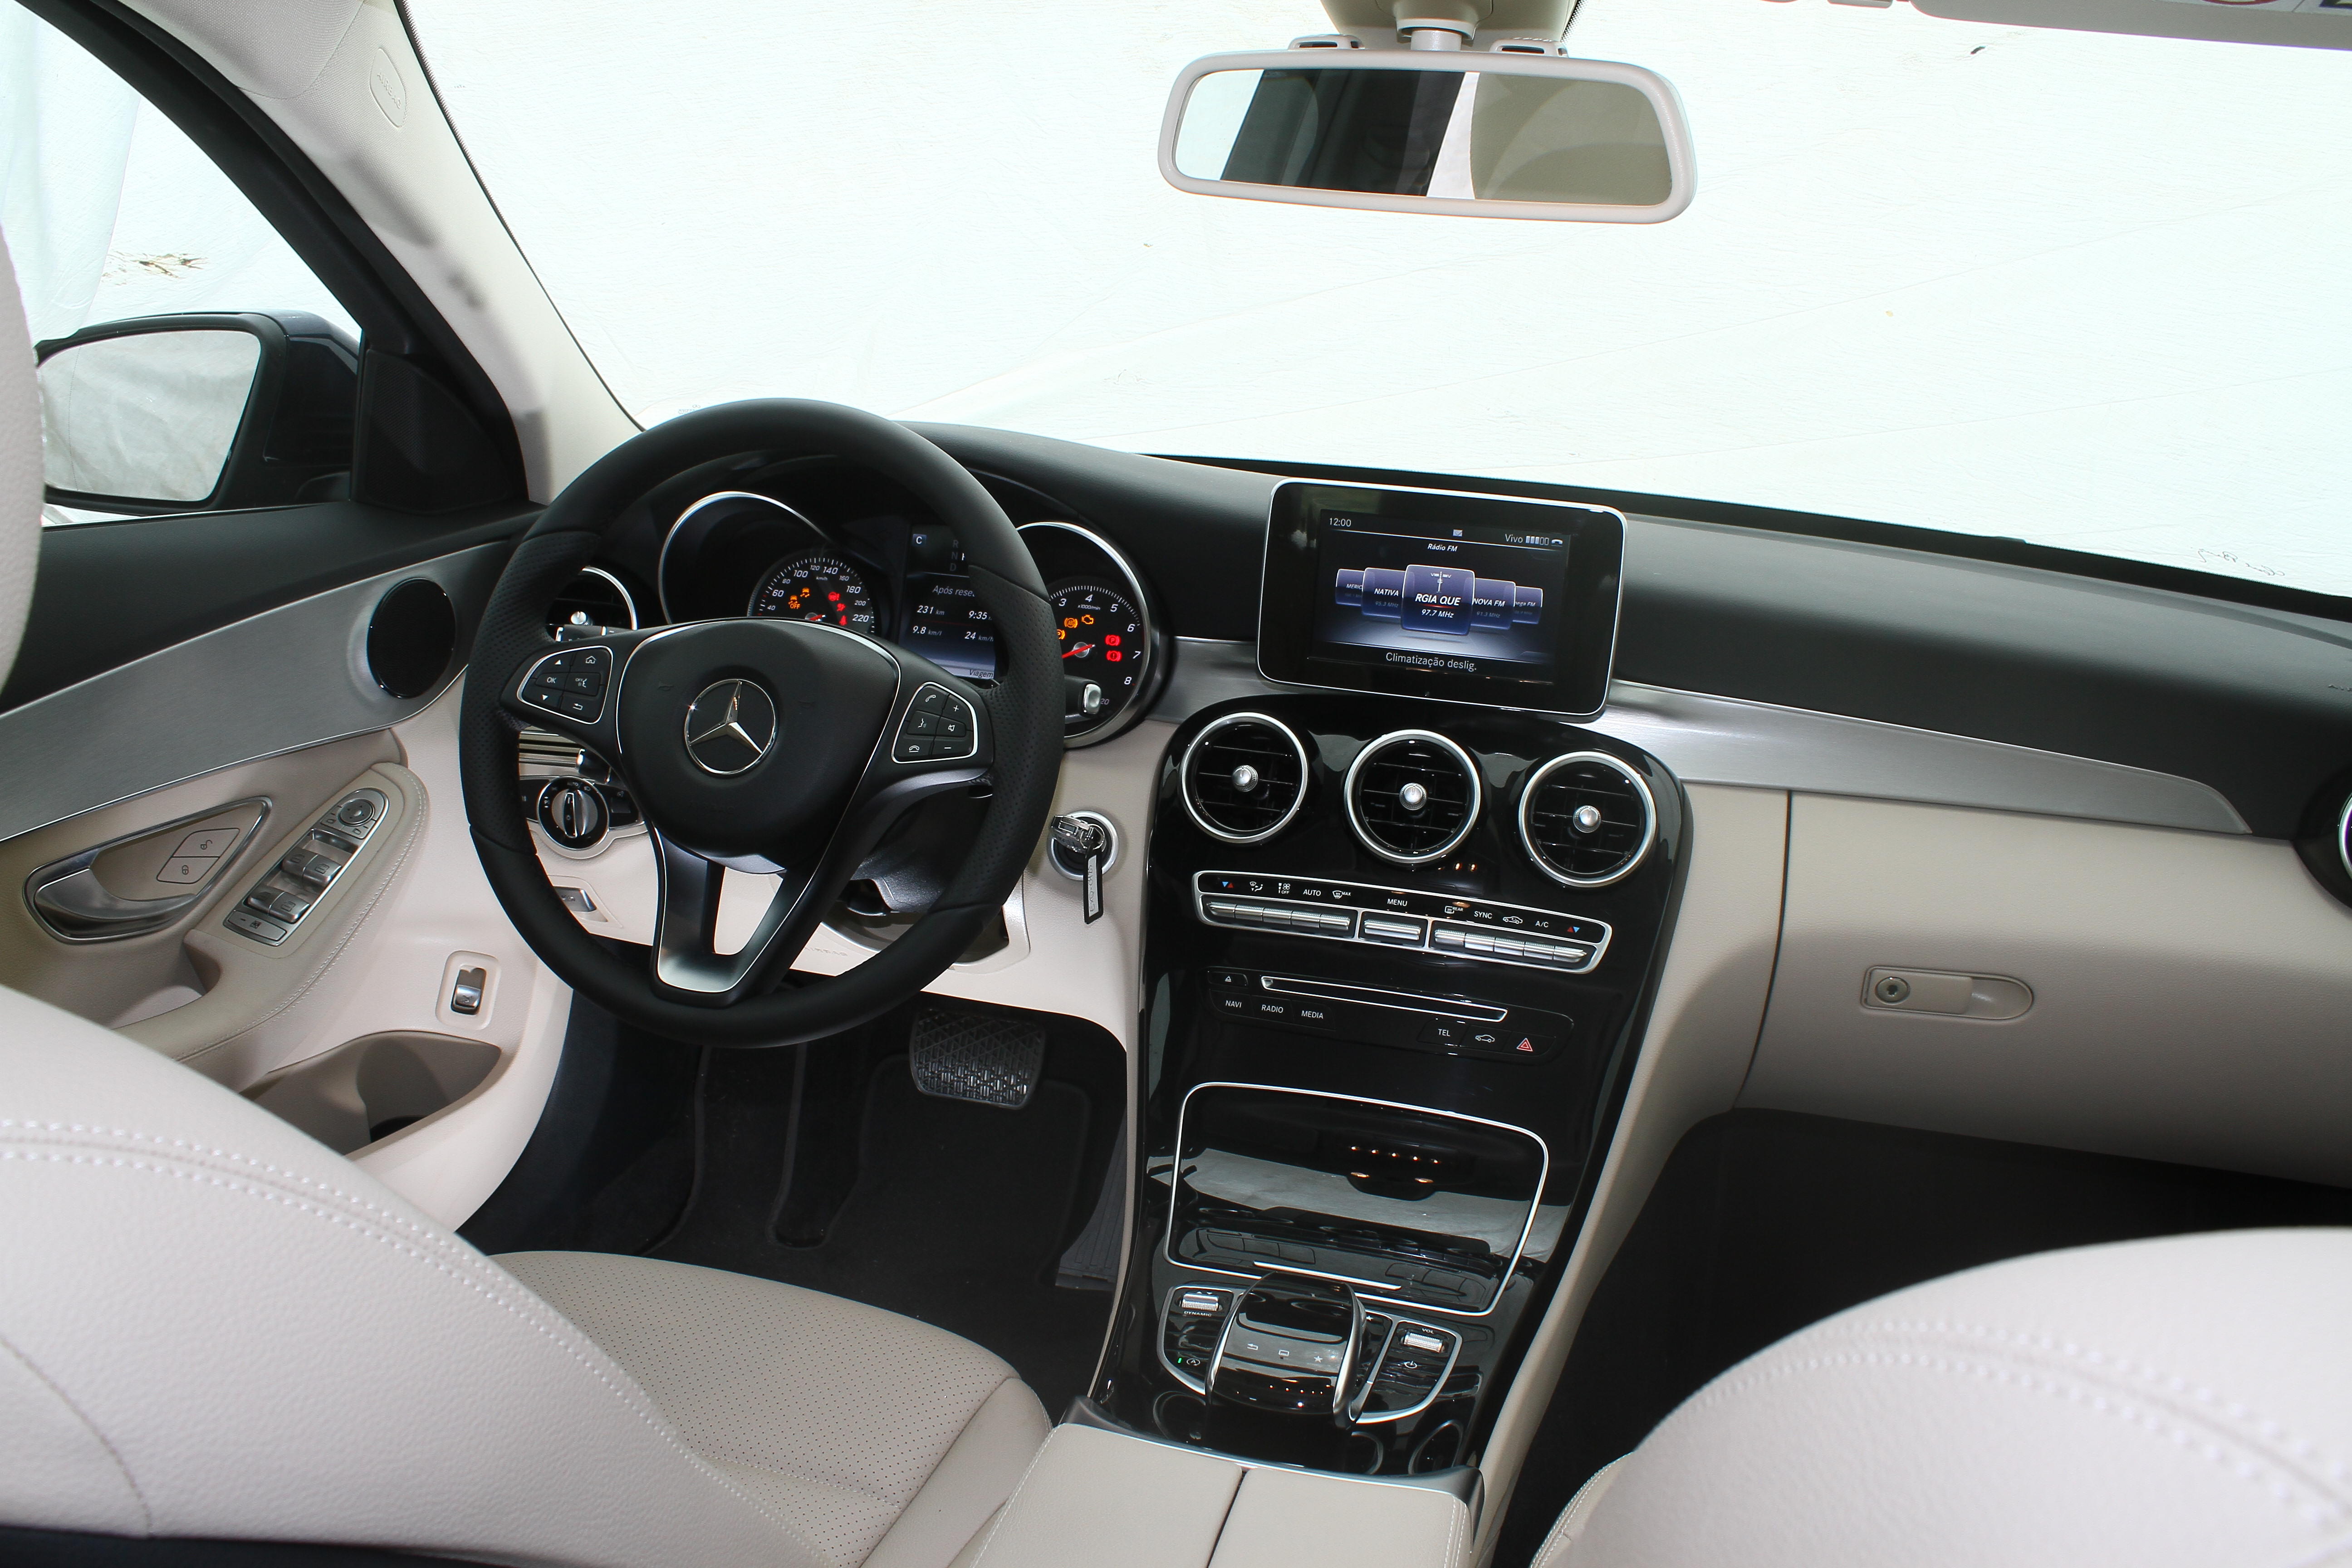  Mercedes-Benz C180 Flex Avantgarde          